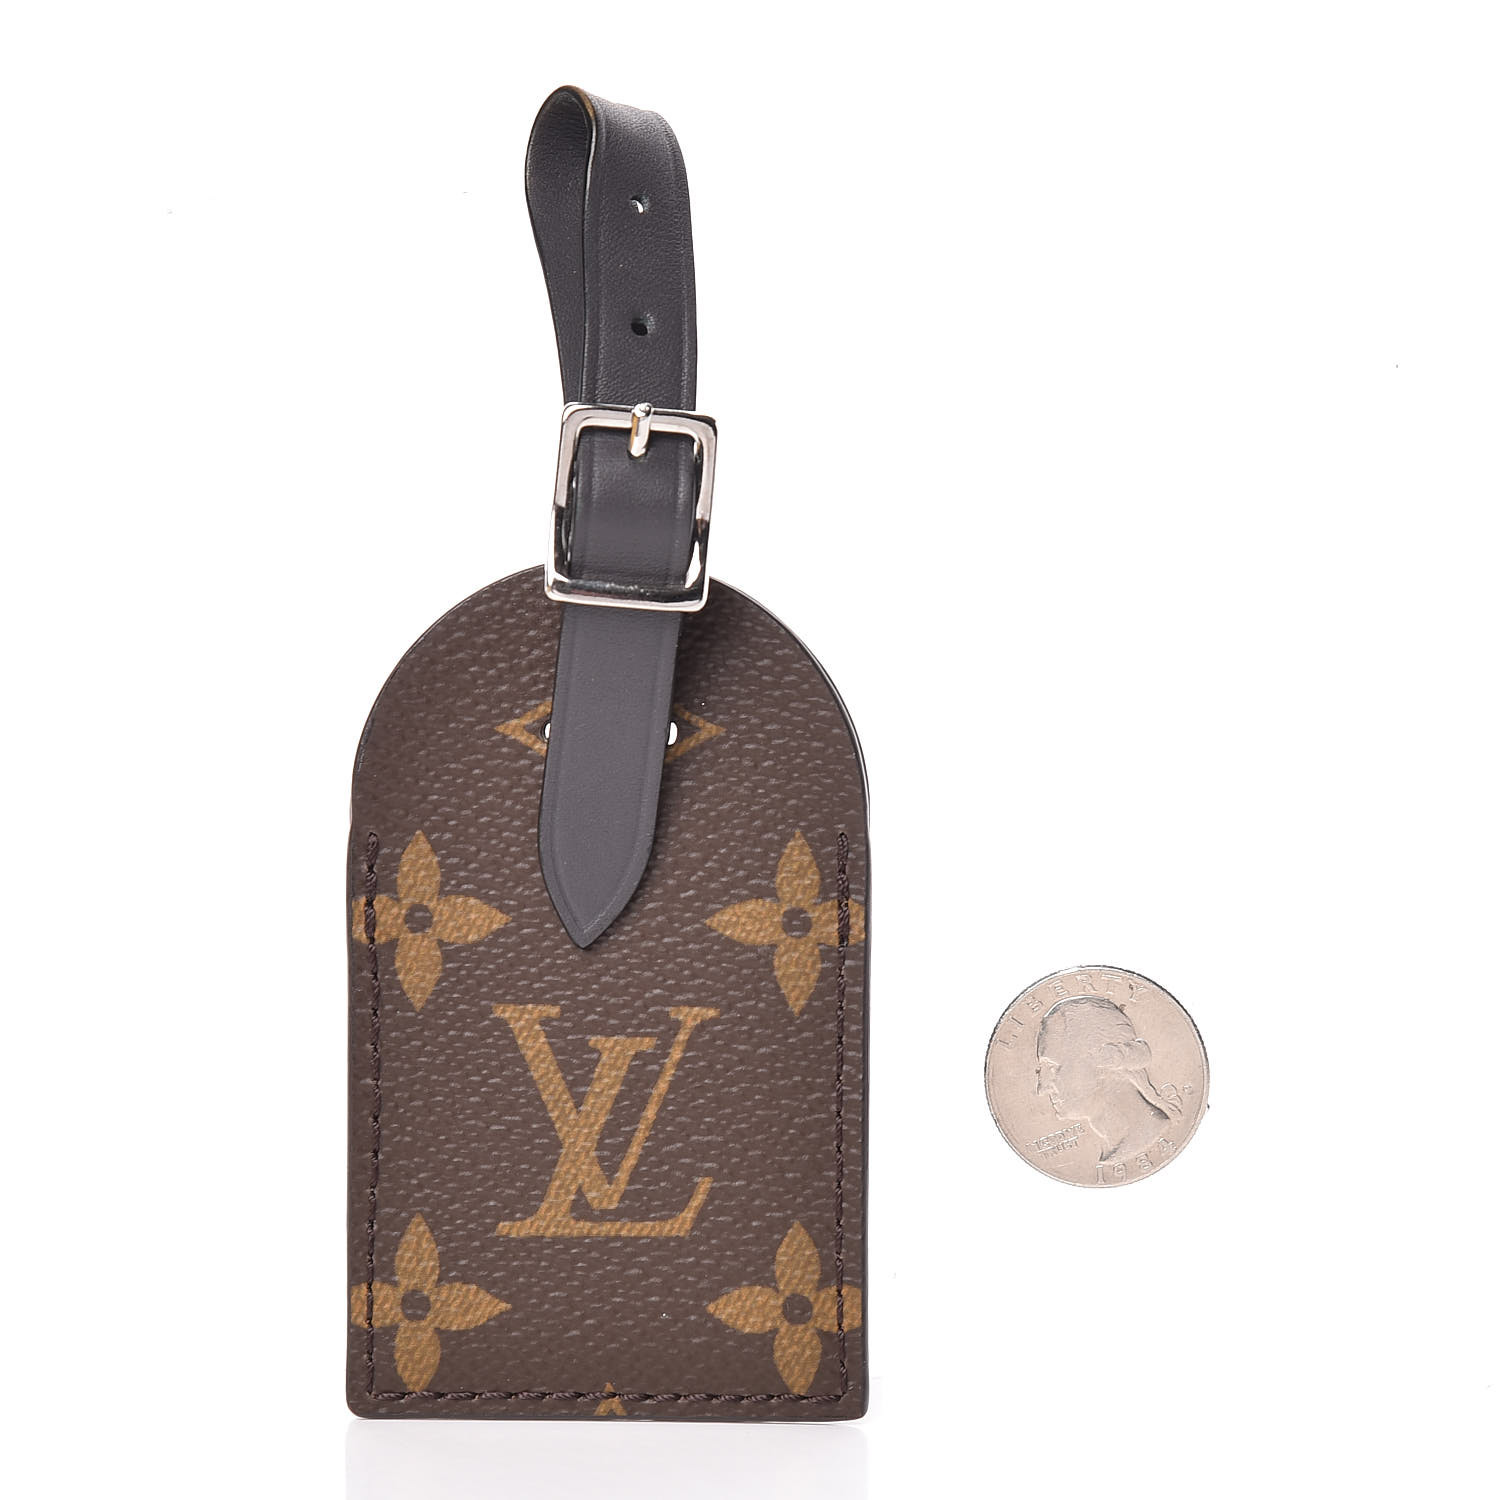 Louis Vuitton Luggage Tag Comparison, Small VS Large 